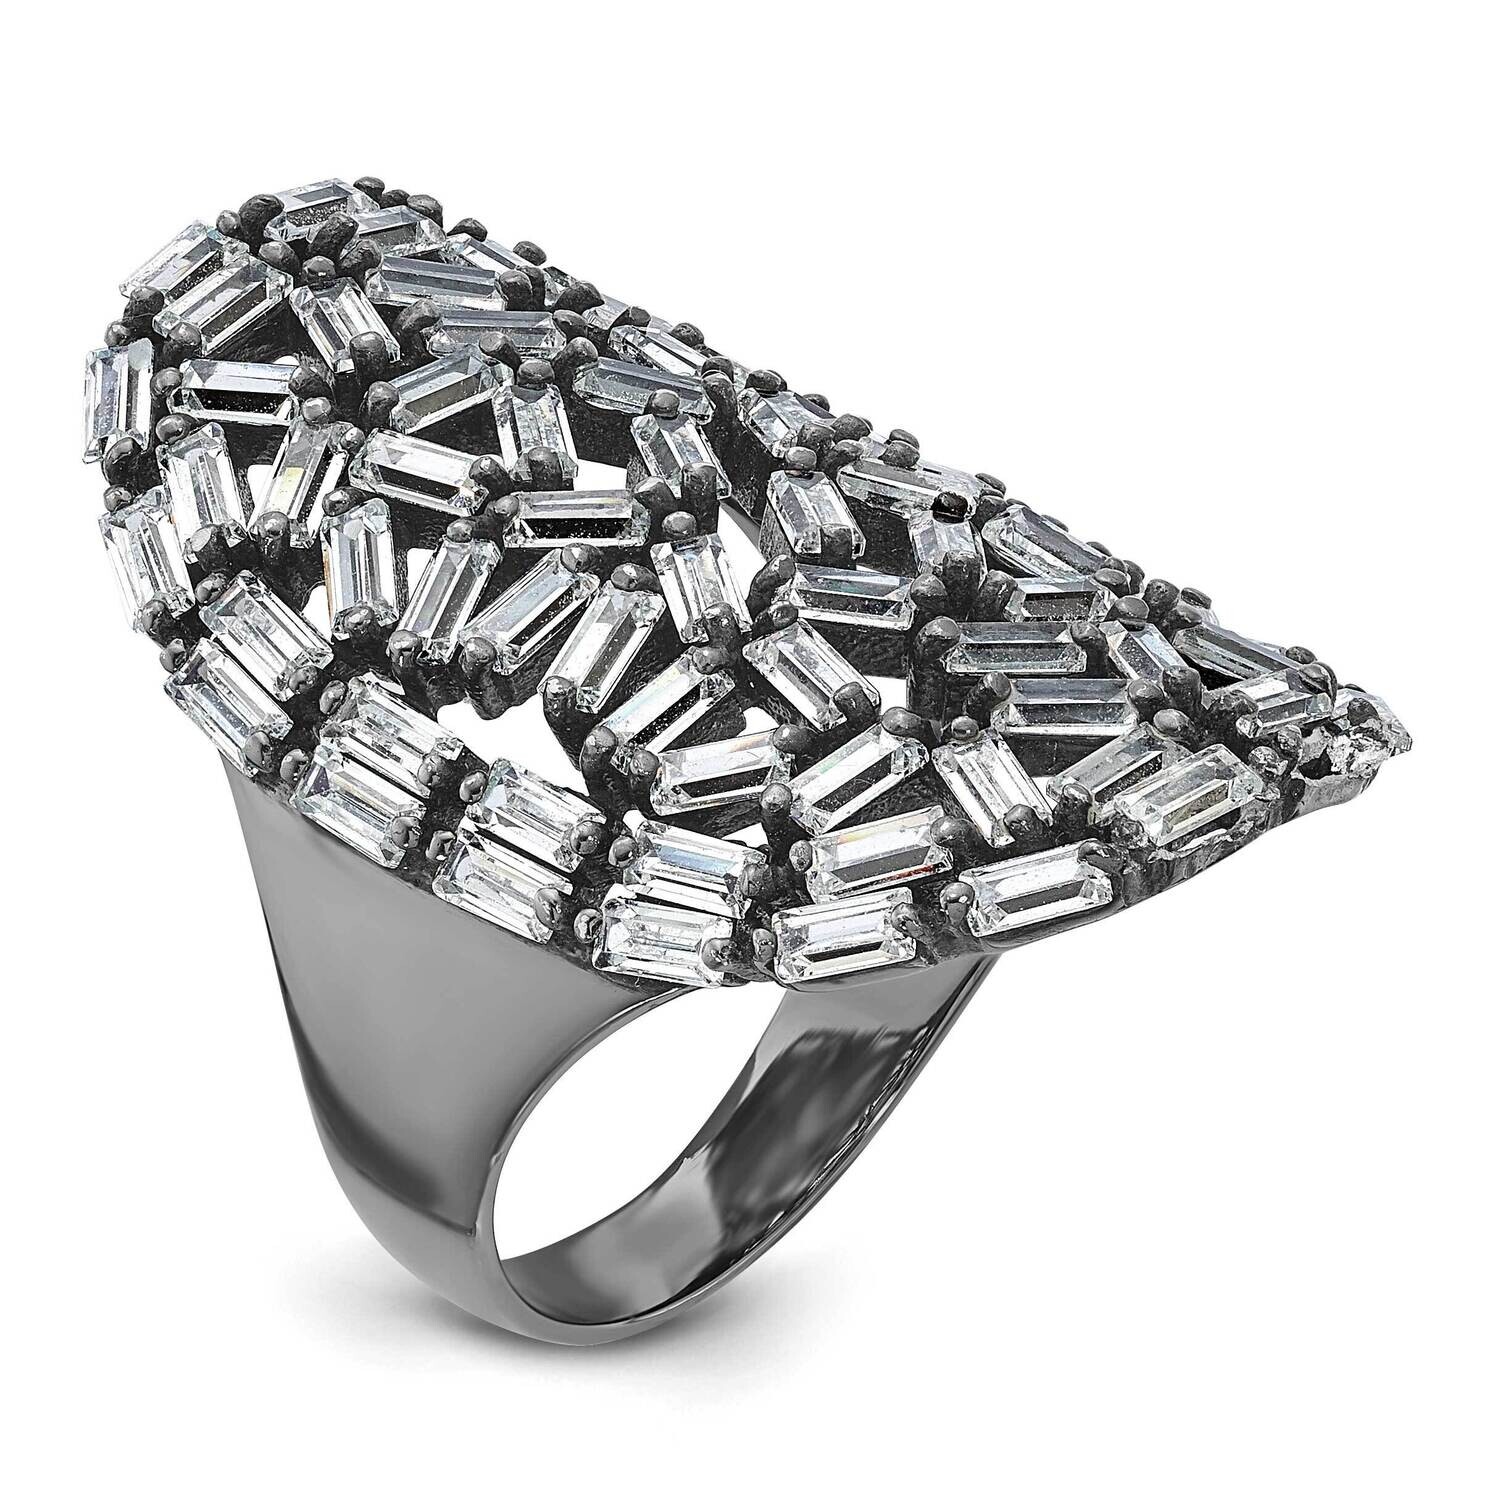 & Black Rhodium Oval Baguette Crystal Ring Sterling Silver J325824012352